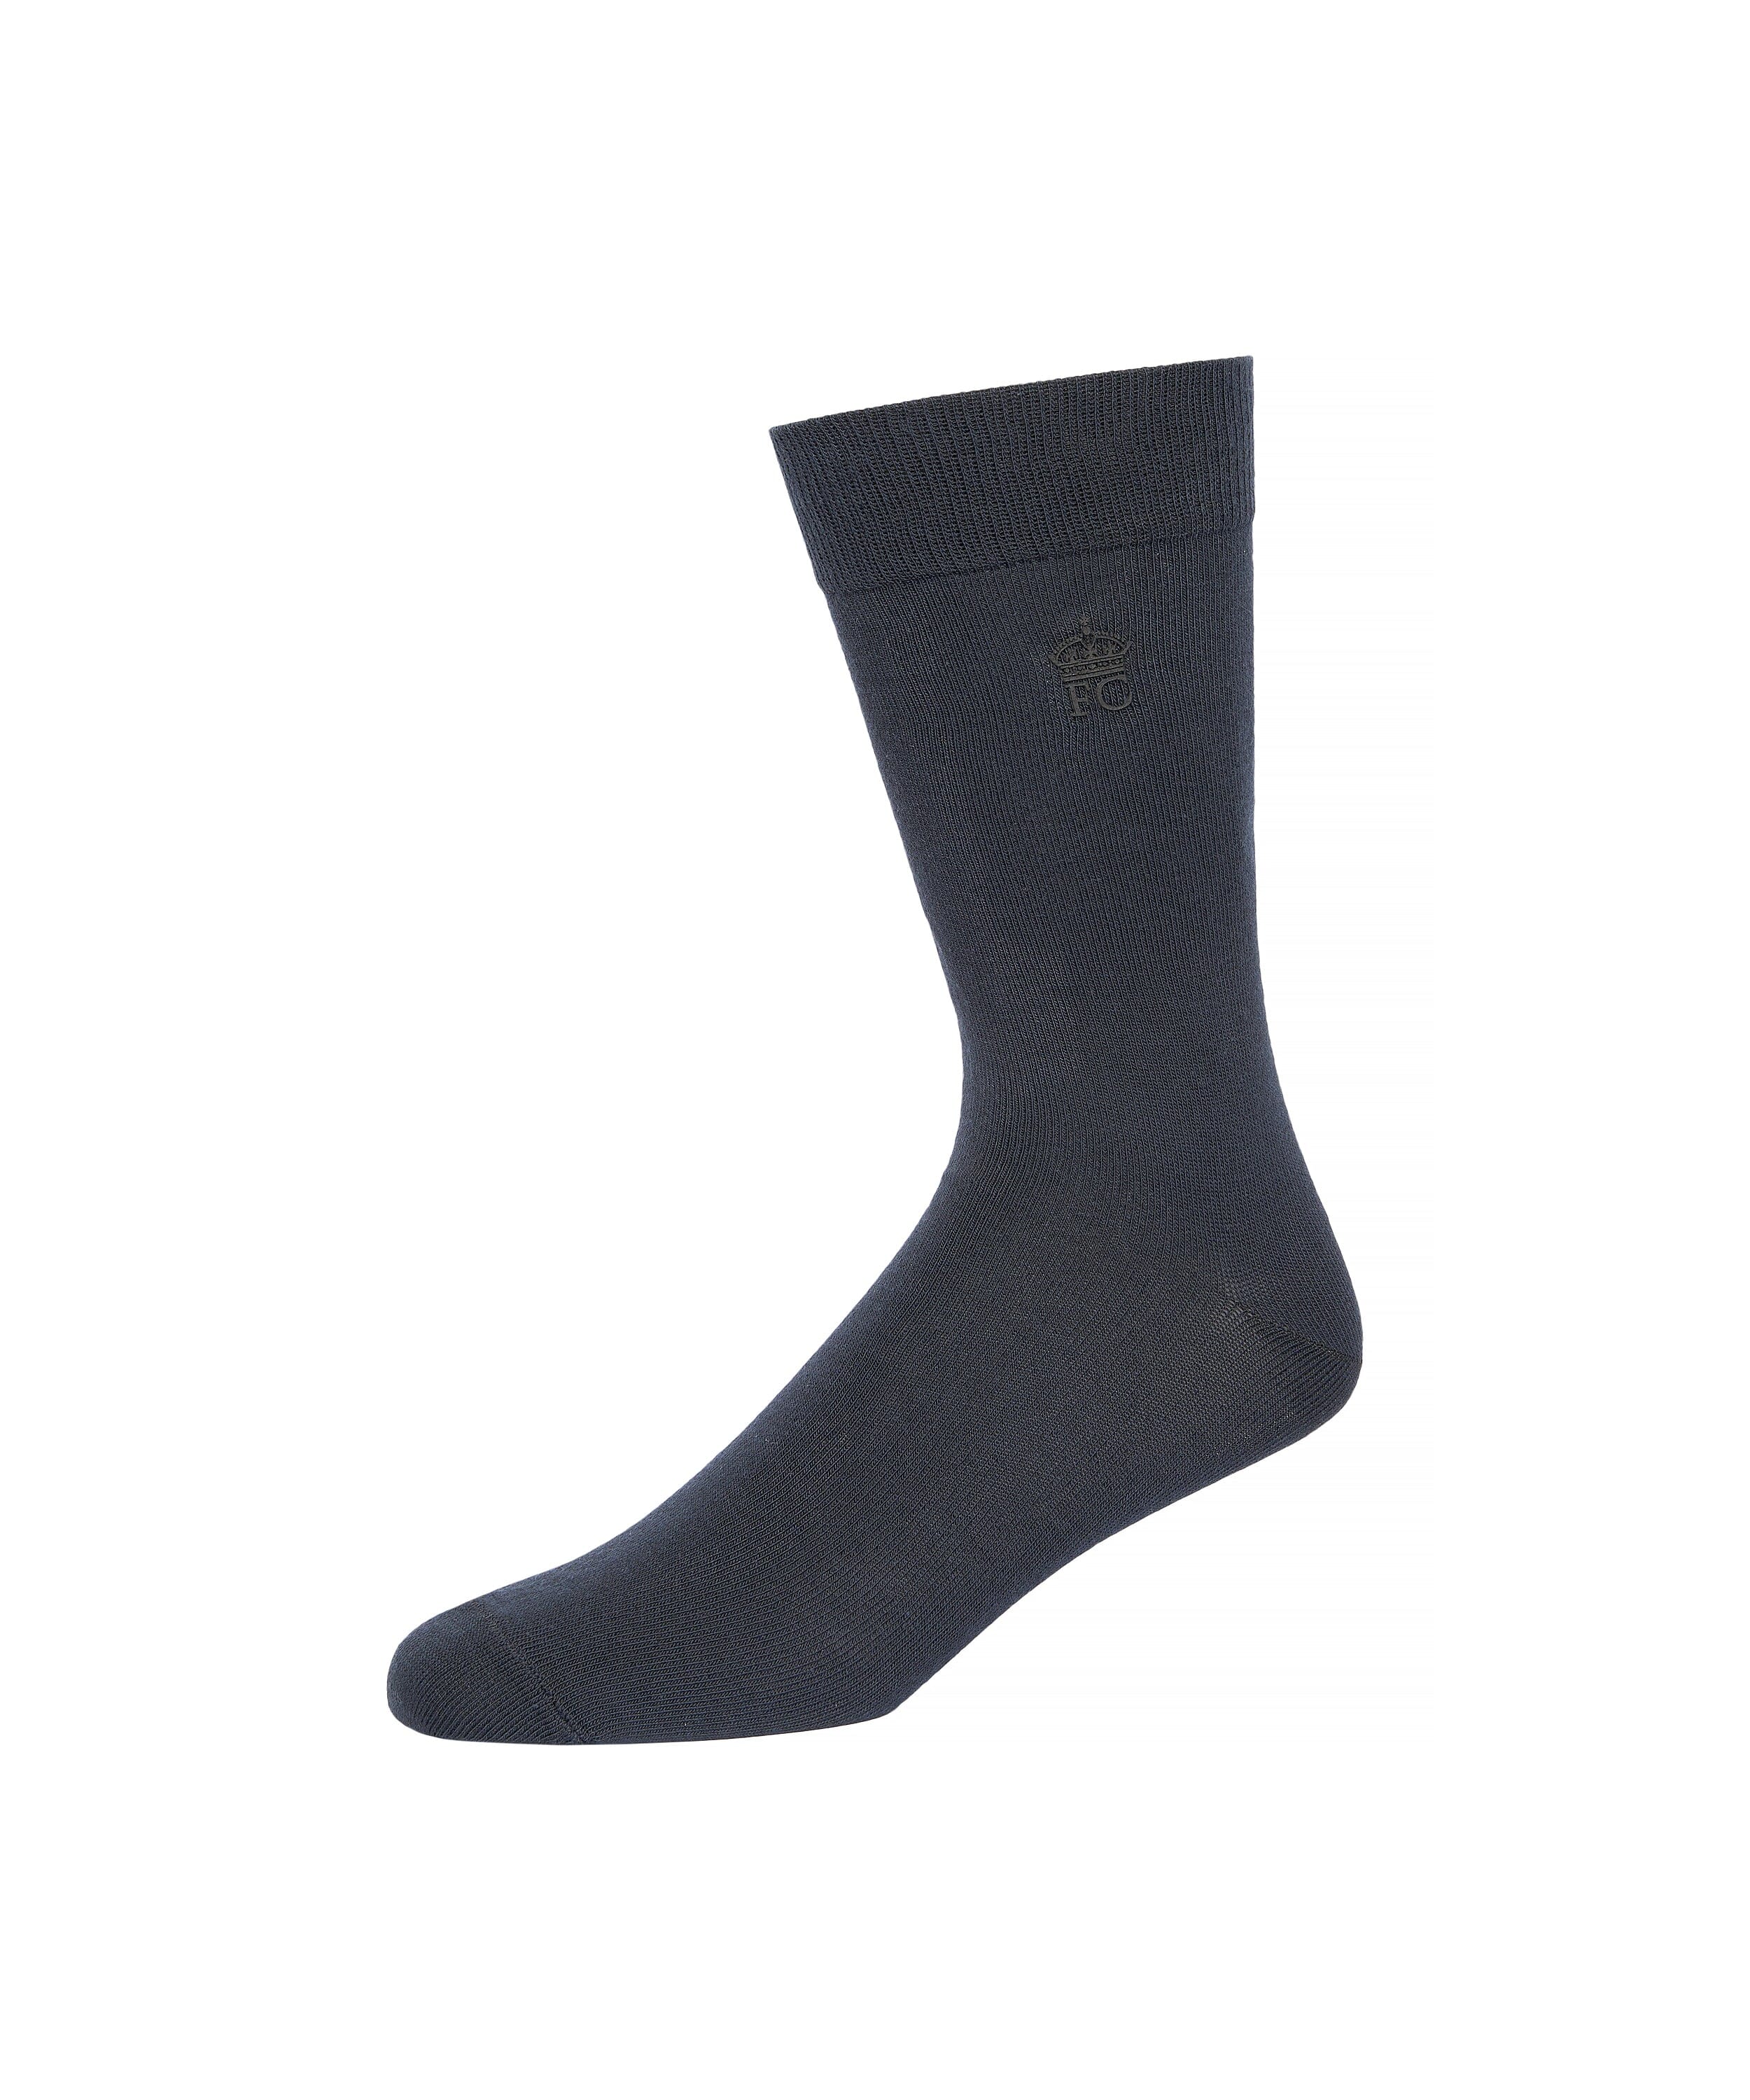 French Connection Argyle Socks 3pk Marine/Charcoal